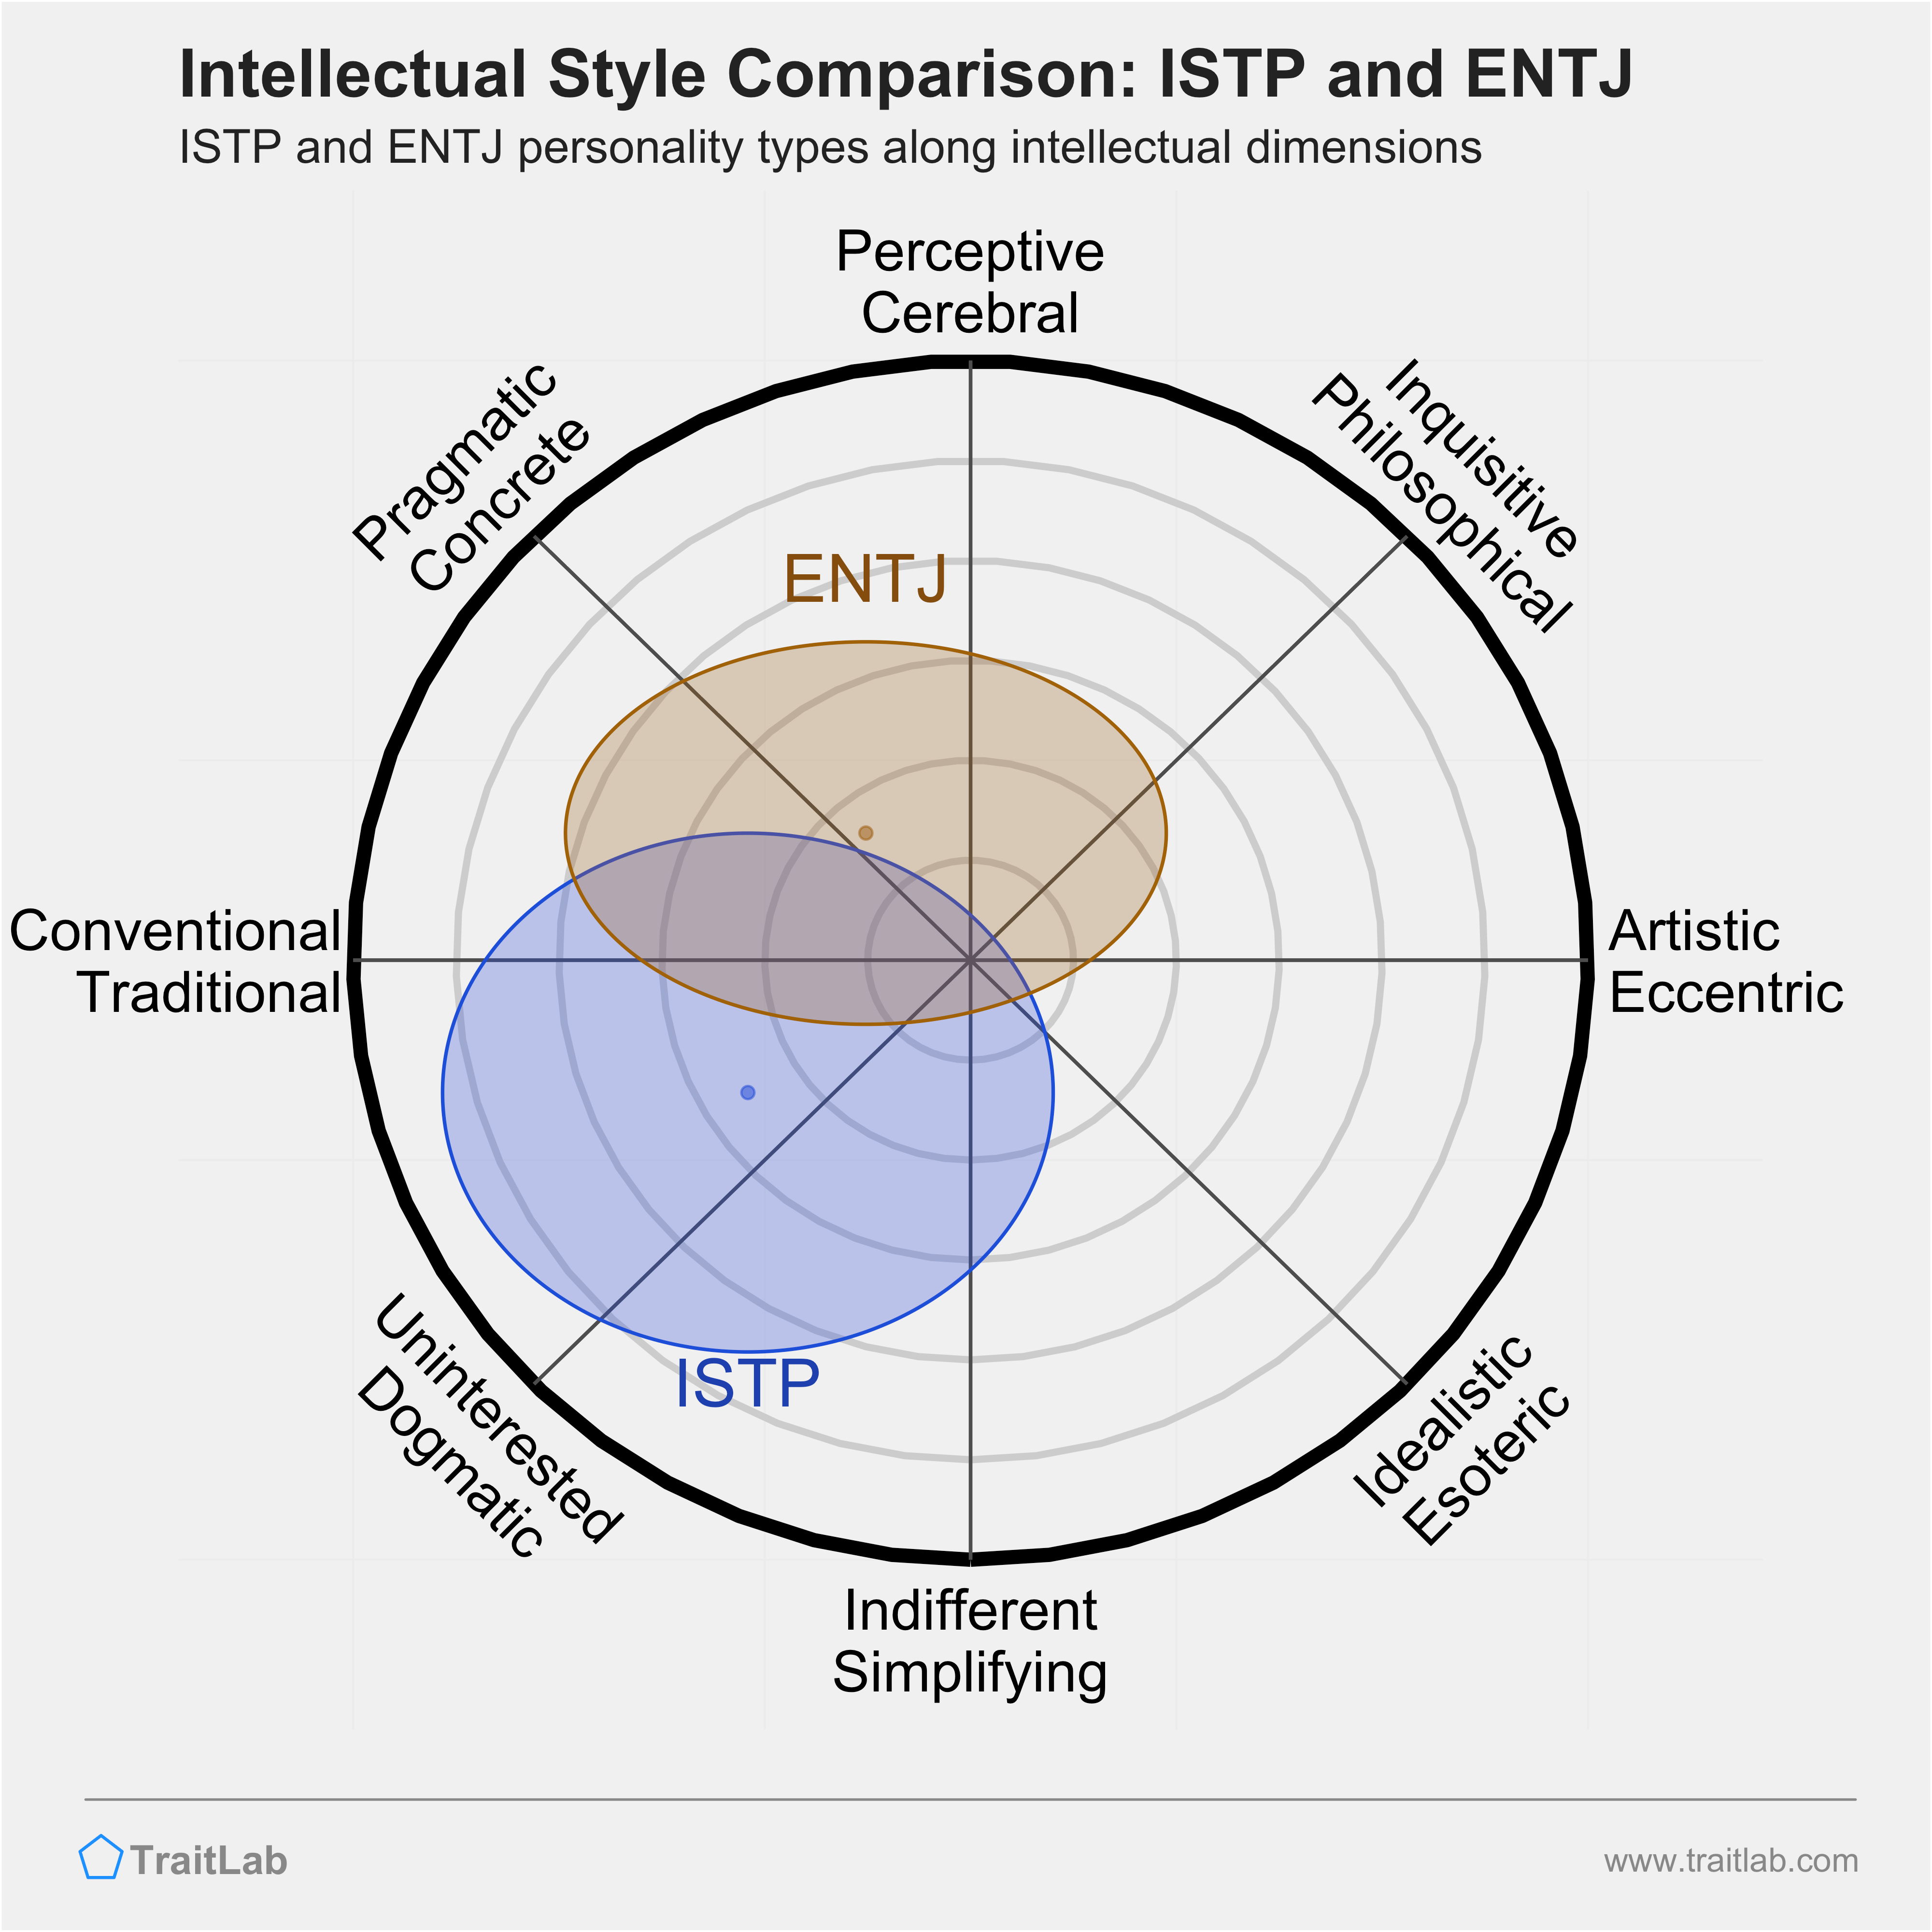 ISTP and ENTJ comparison across intellectual dimensions